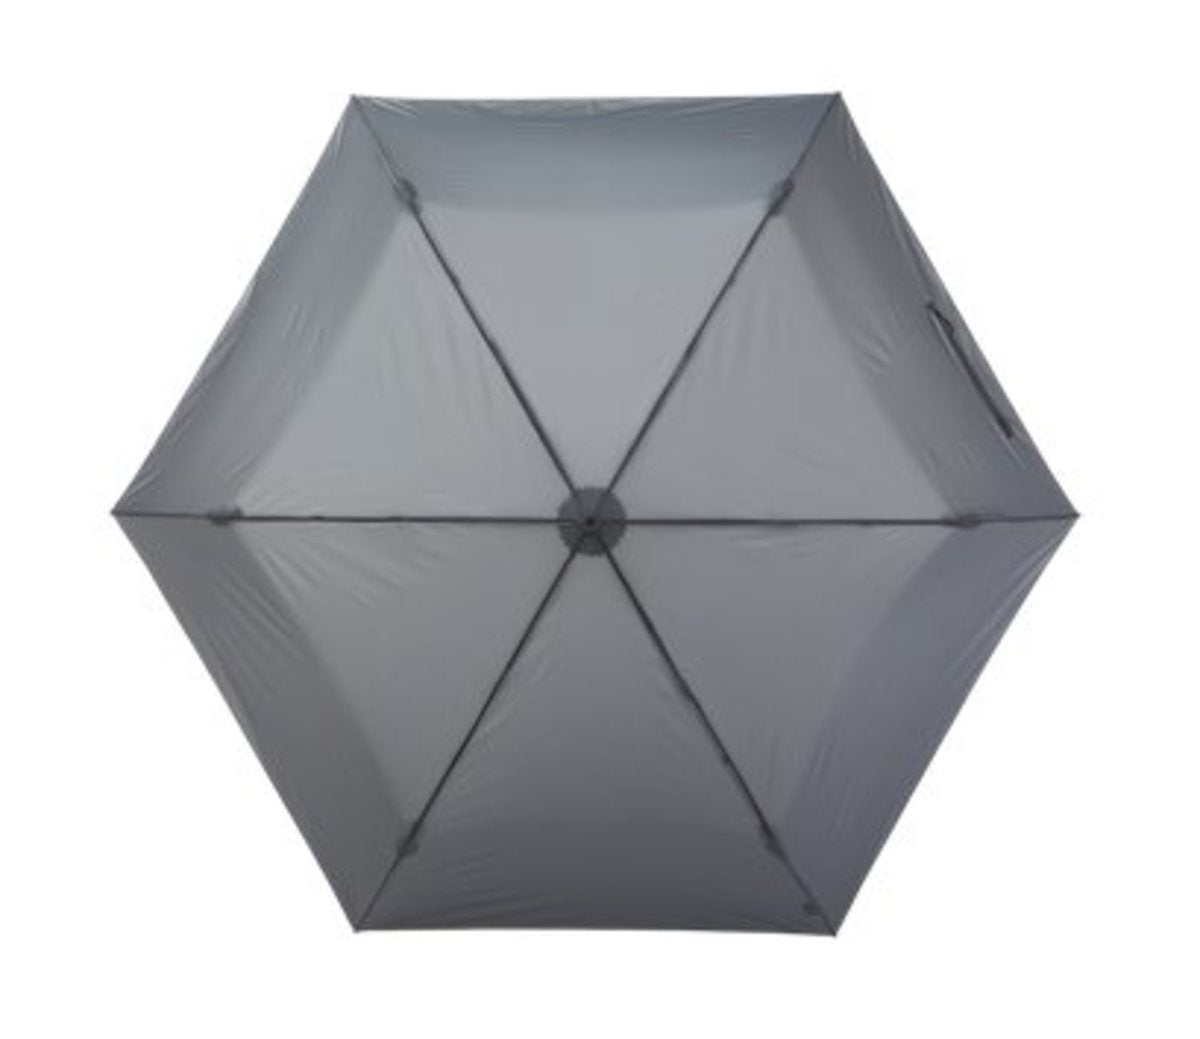 Amvel - VERYKAL LARGE (60cm) 超極輕一鍵式自動折傘 - 灰色